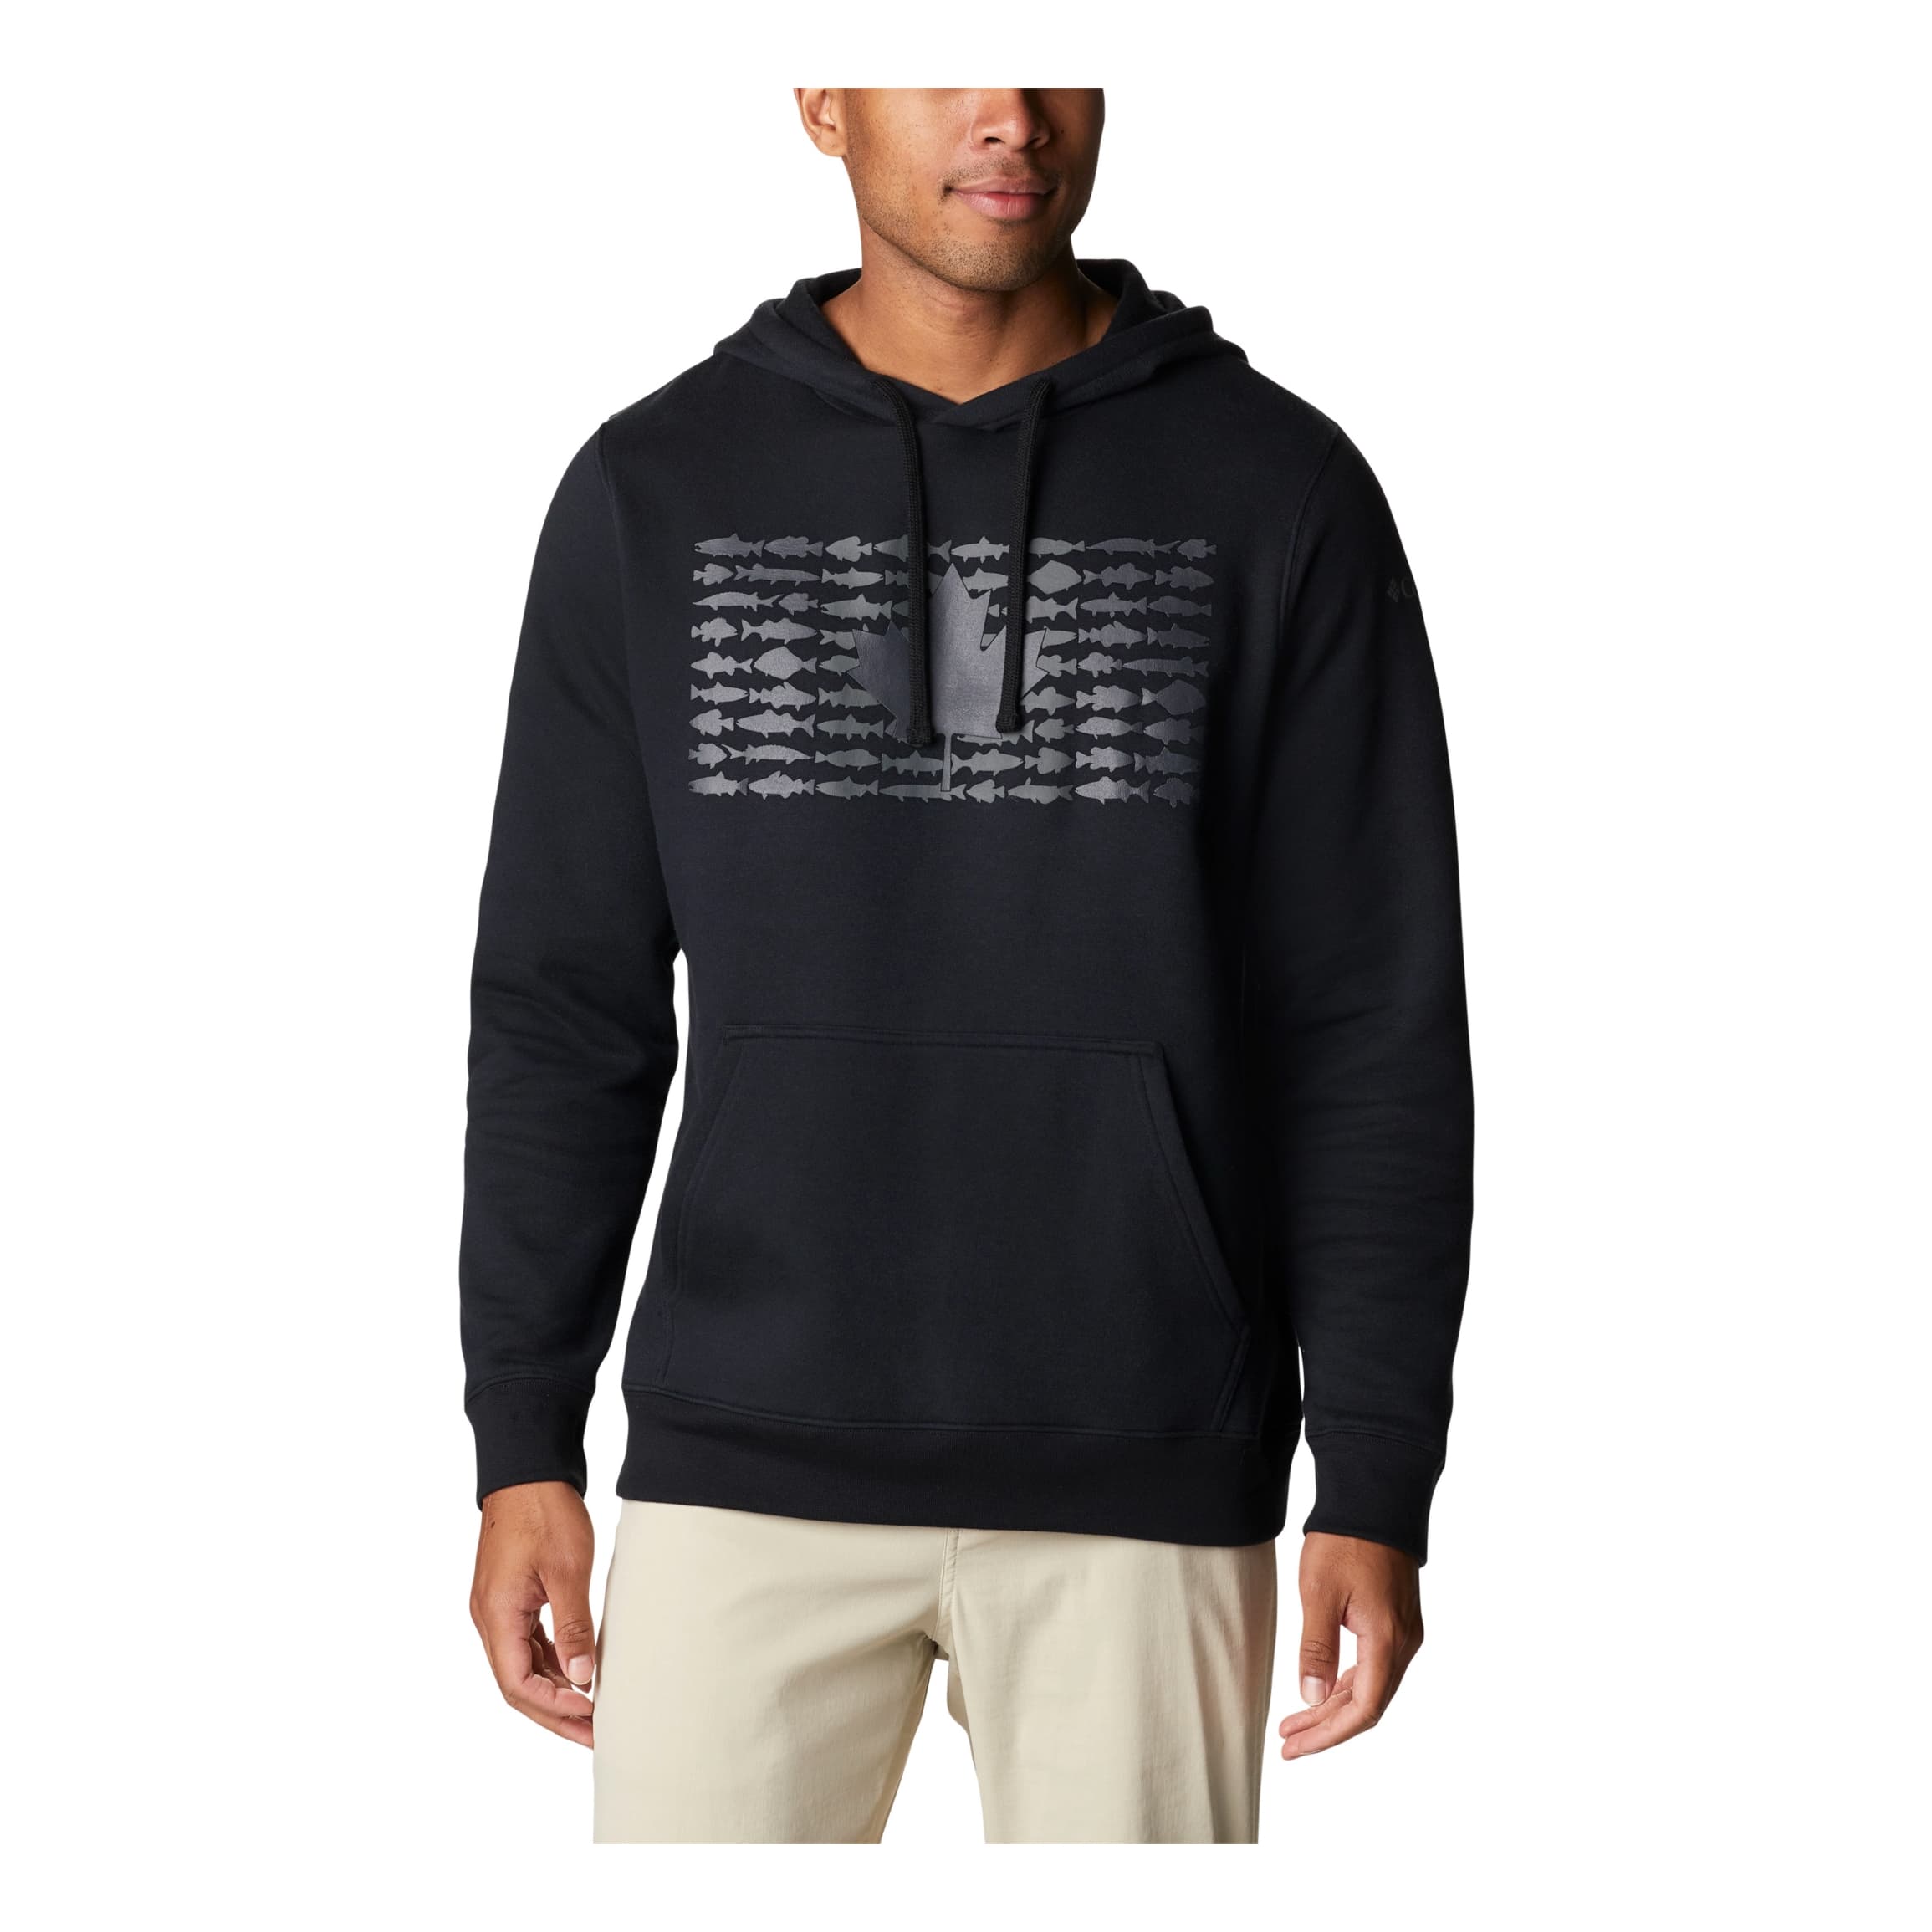 Under Armour Logo Hoodie Sweatshirt (Men's XL) Black/Gray